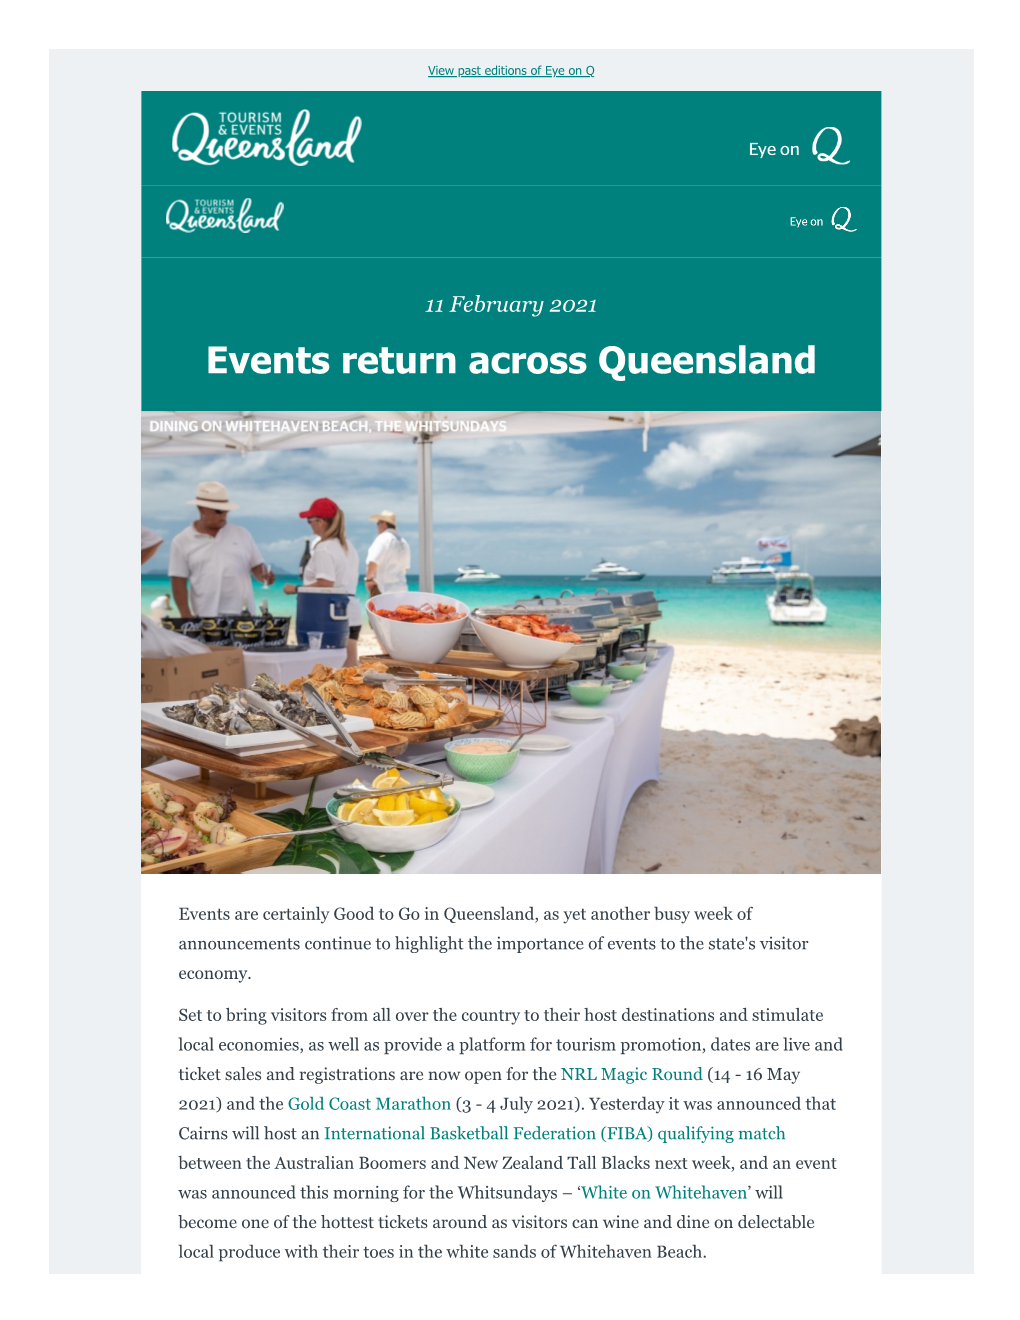 11 February 2021 Events Return Across Queensland